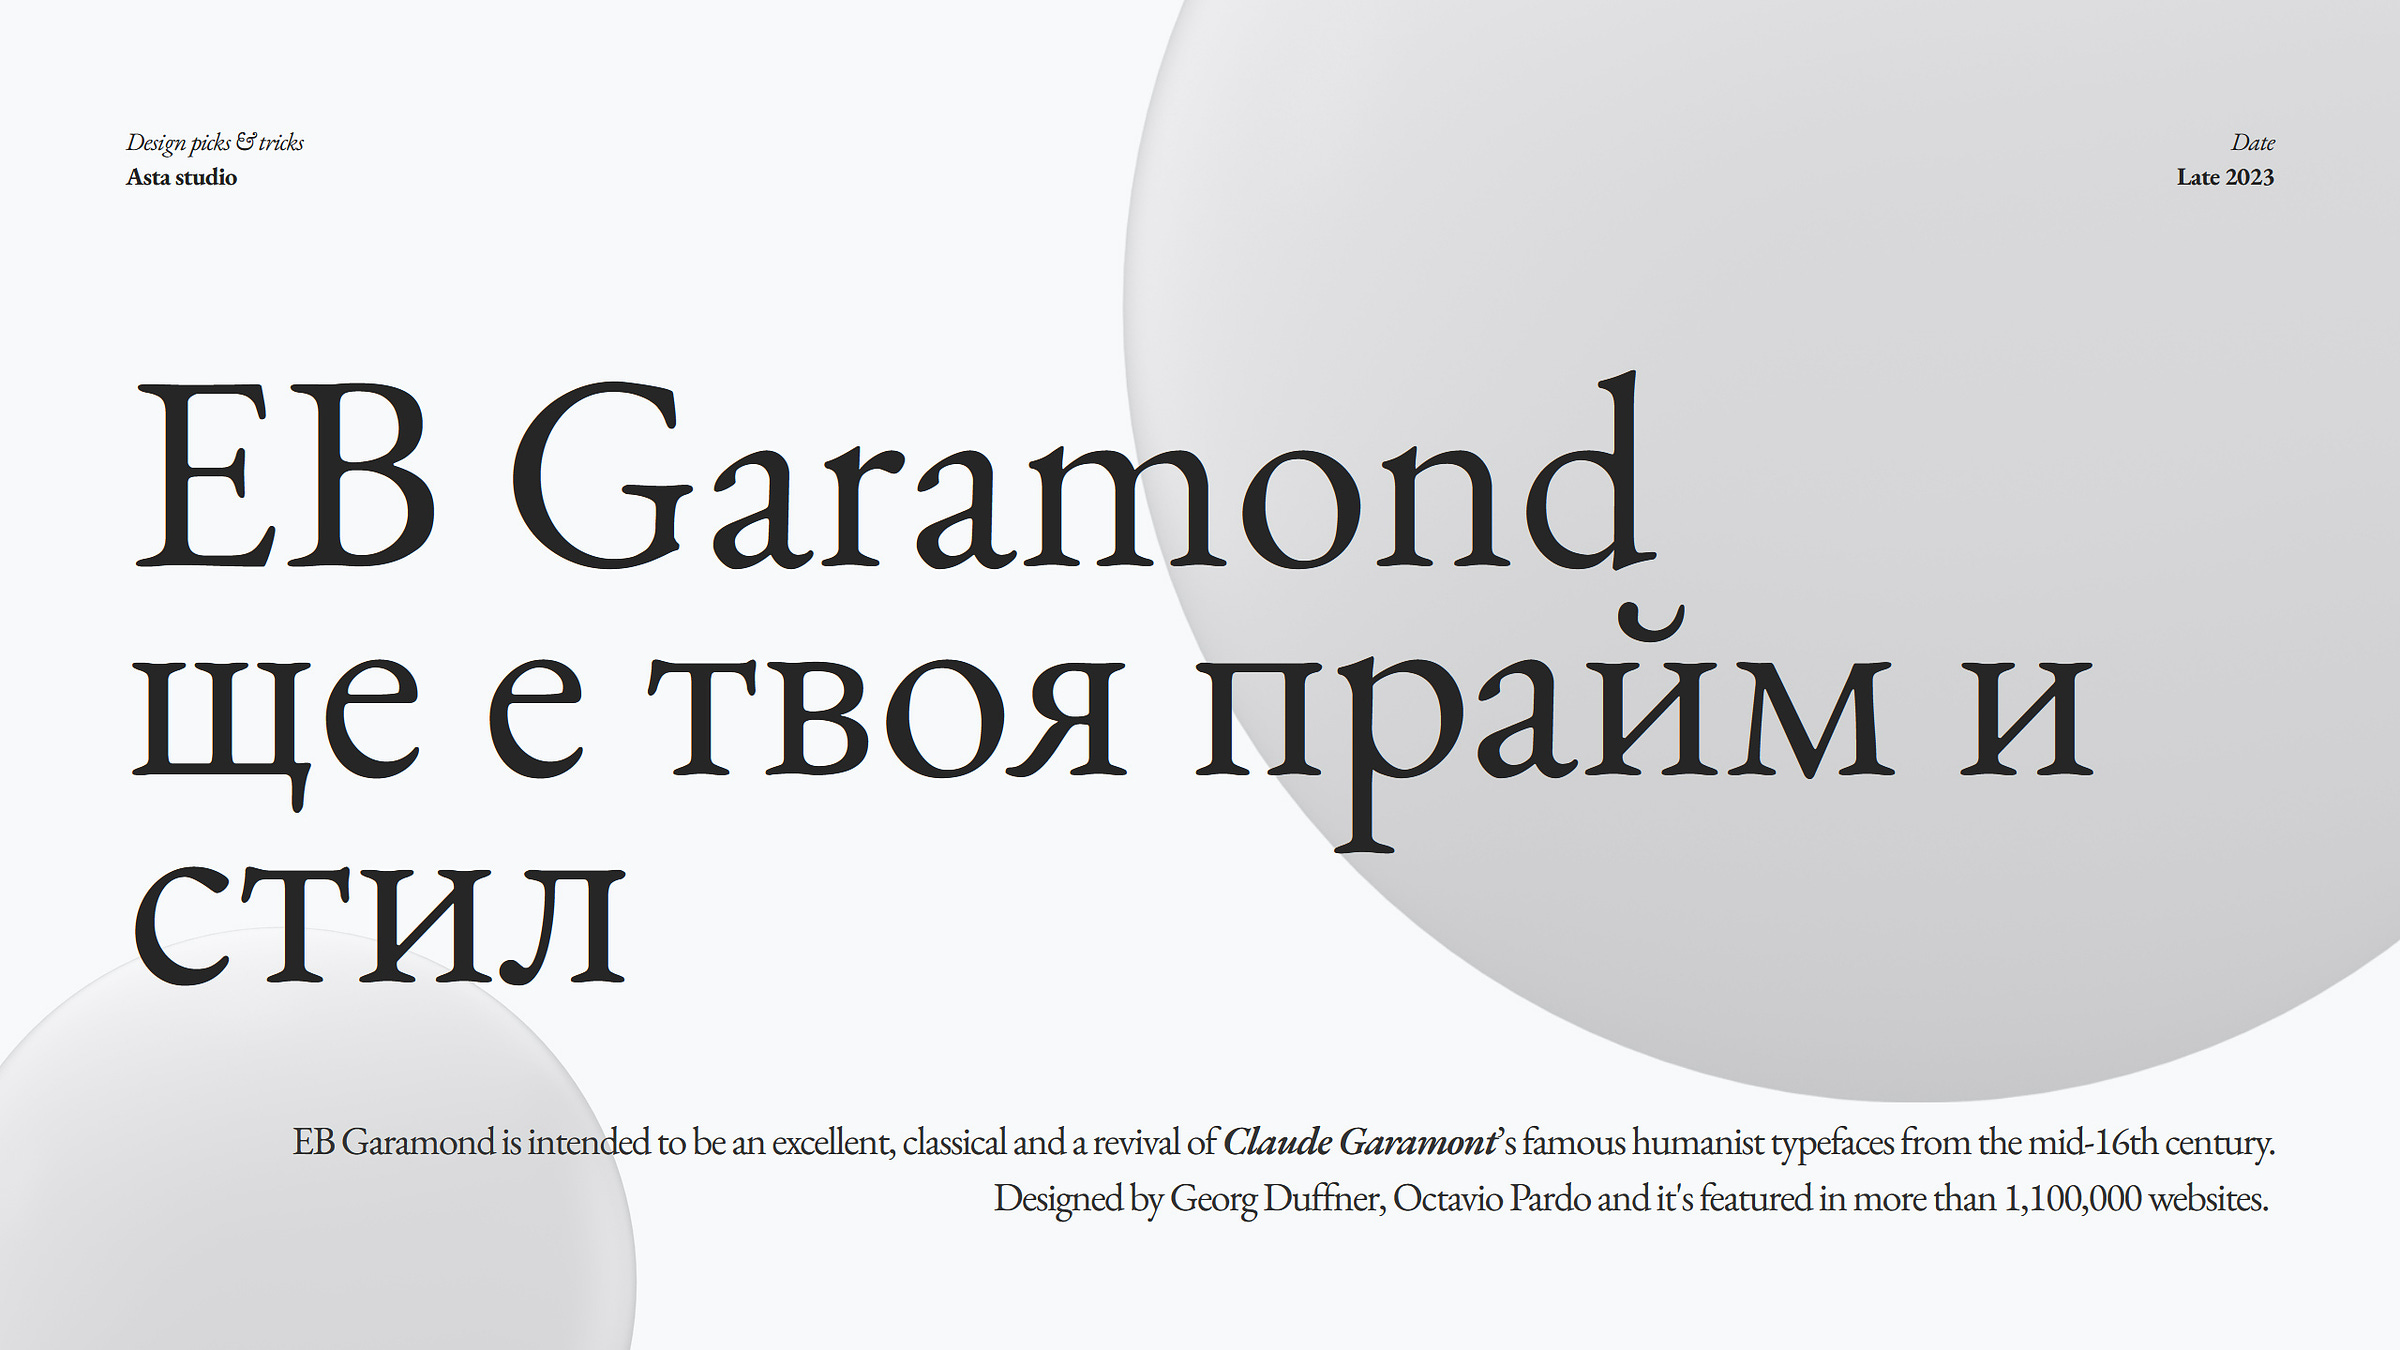 EB Garamond font family use example on light / white backgound